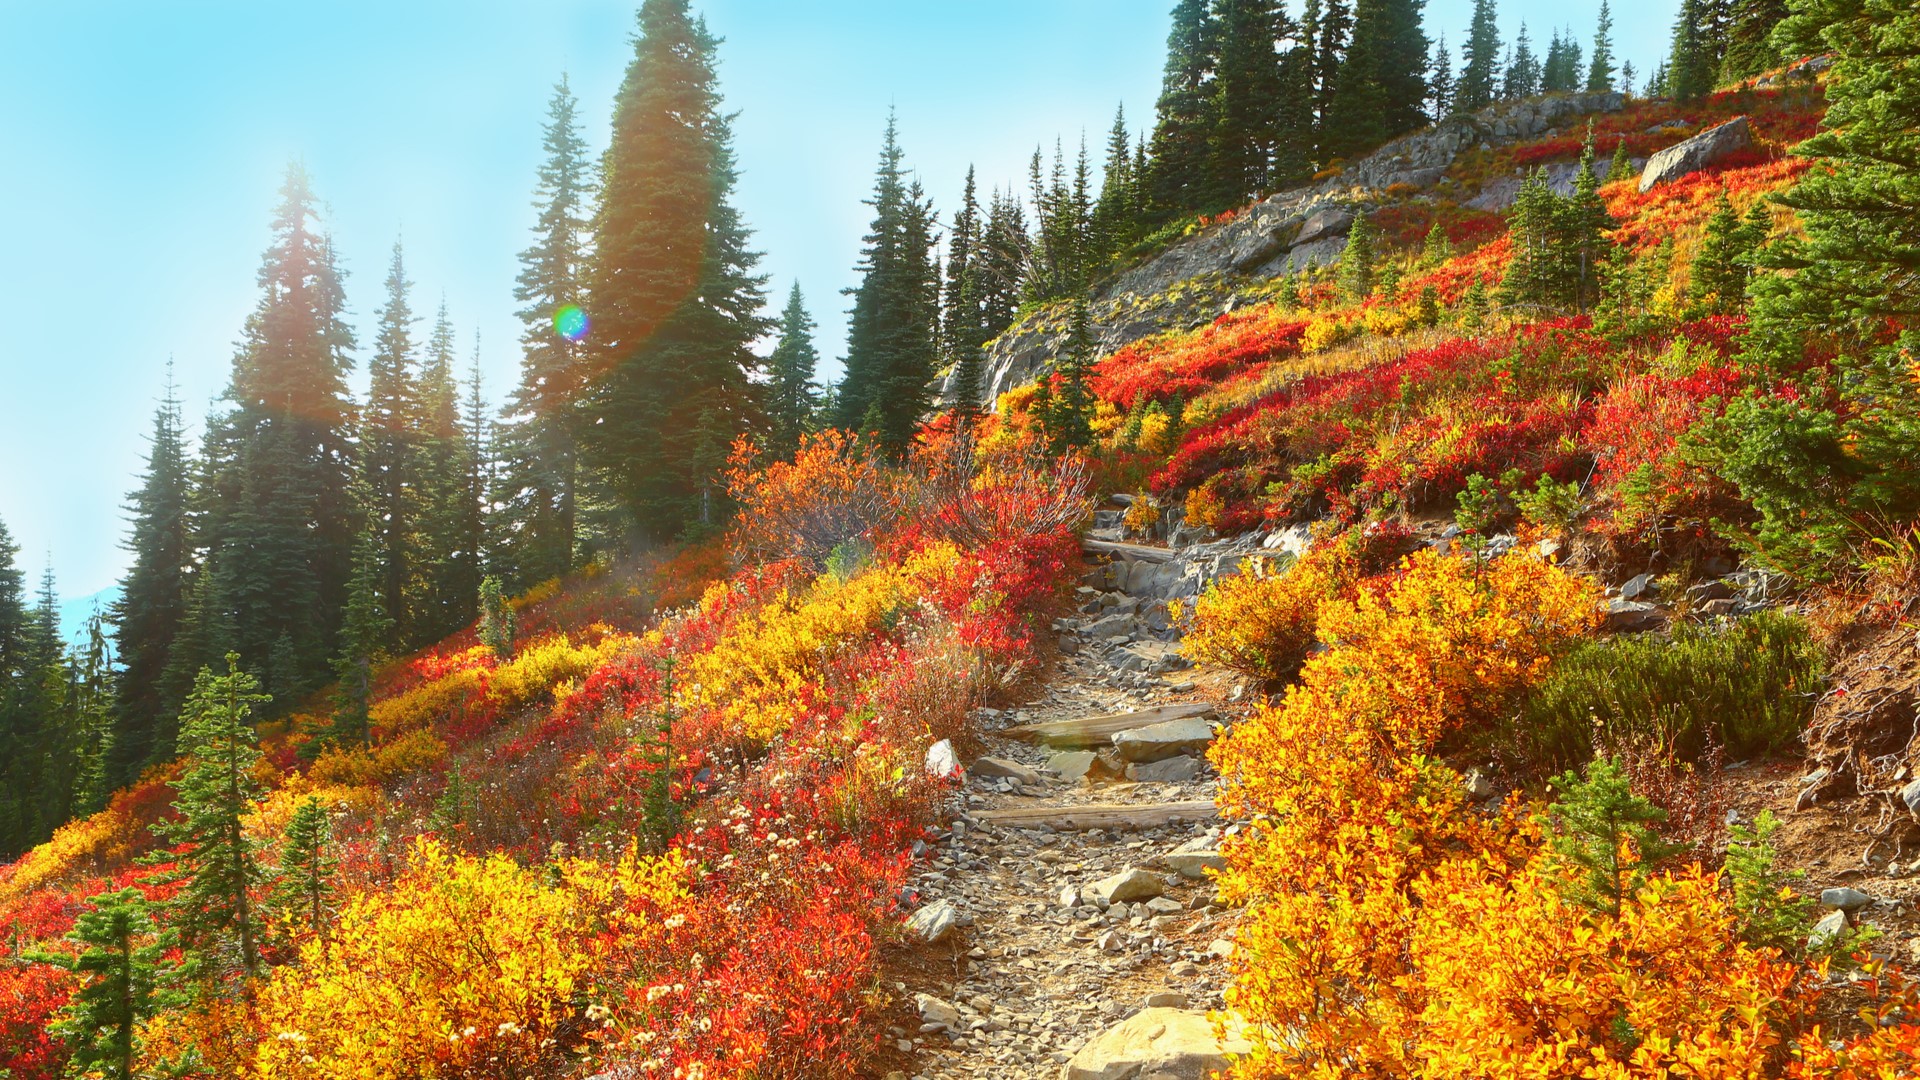 Northwest hiking trails that celebrate the splendor of Fall | king5.com